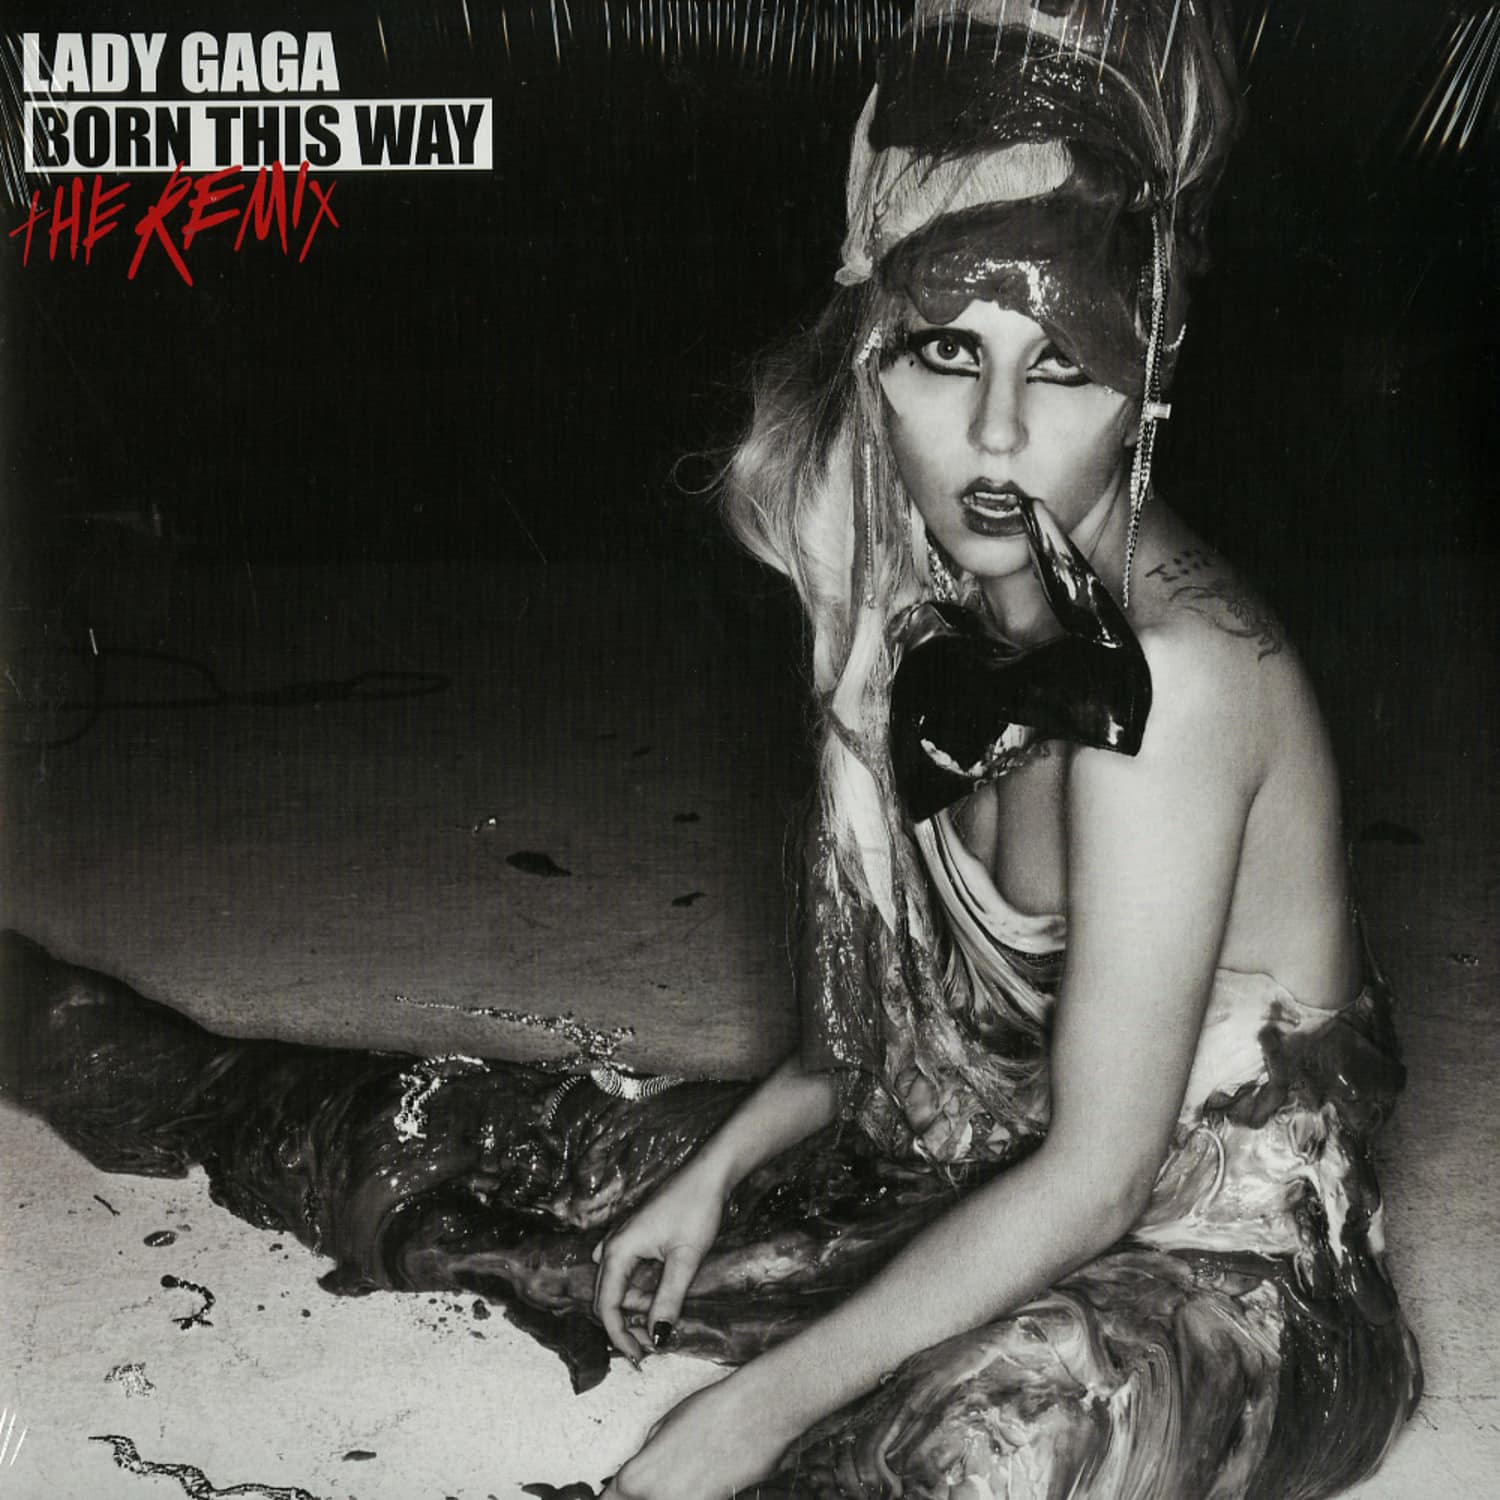 Lady Gaga - BORN THIS WAY - THE REMIX 